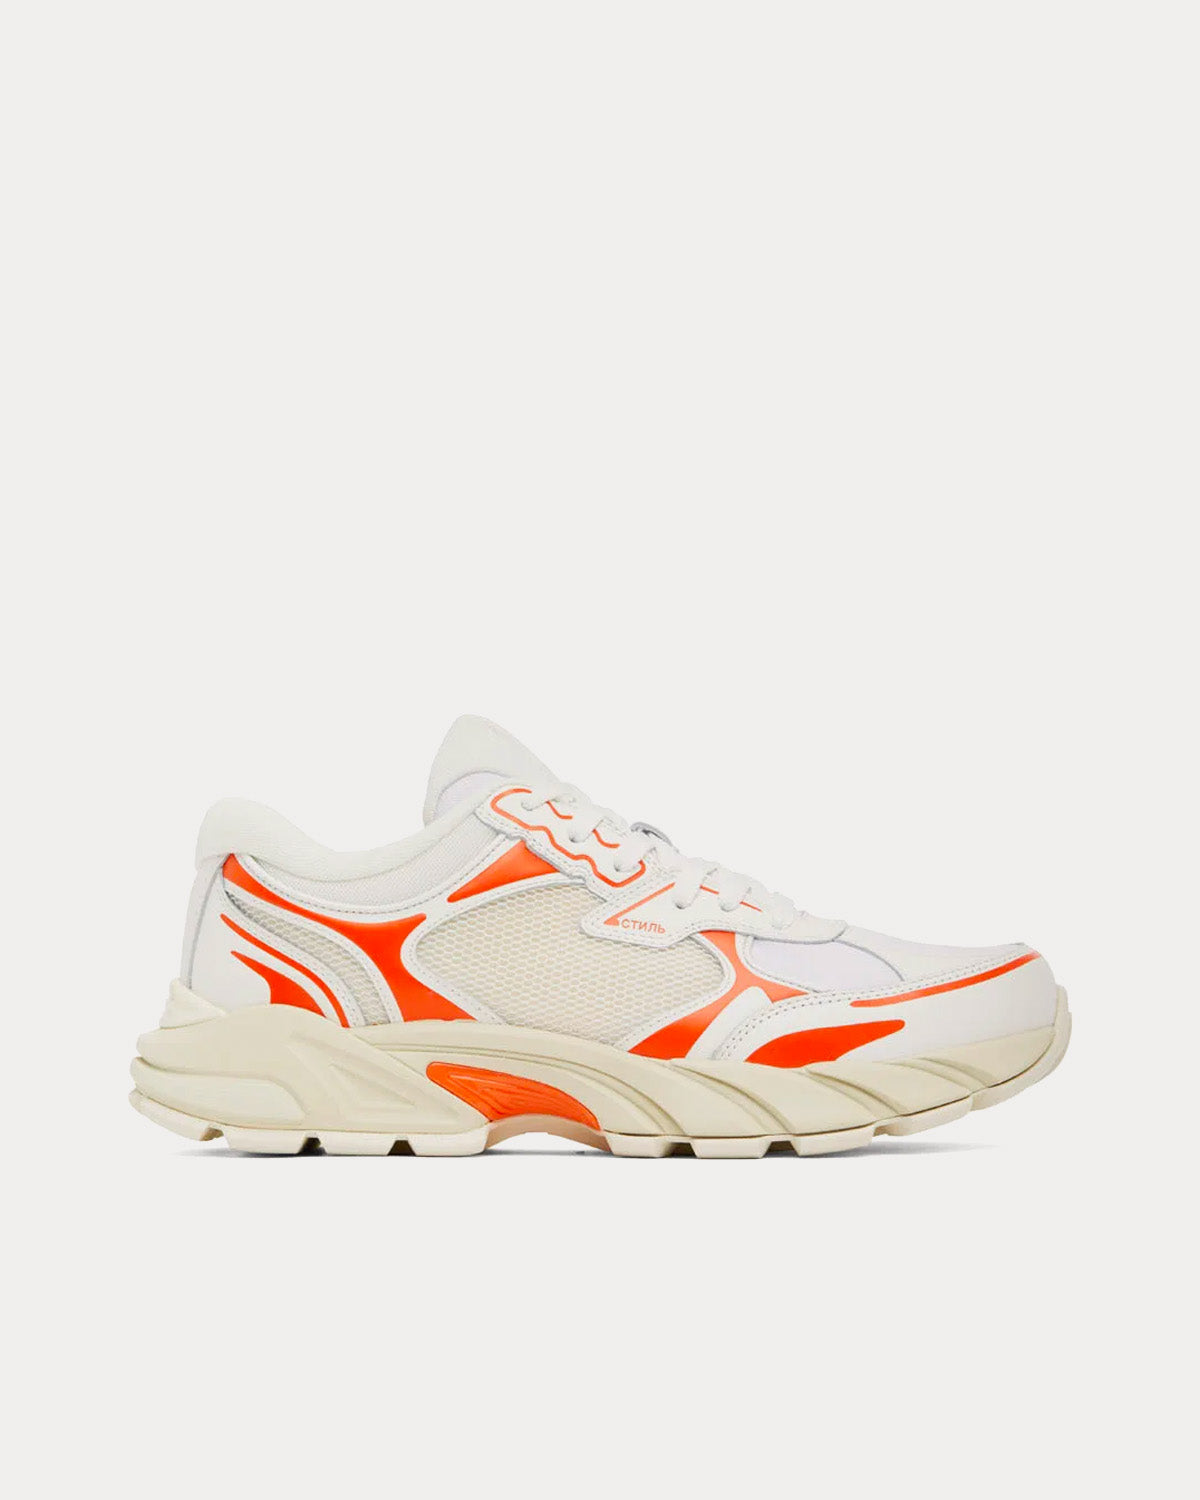 Heron Preston - Block Stepper White / Orange Low Top Sneakers